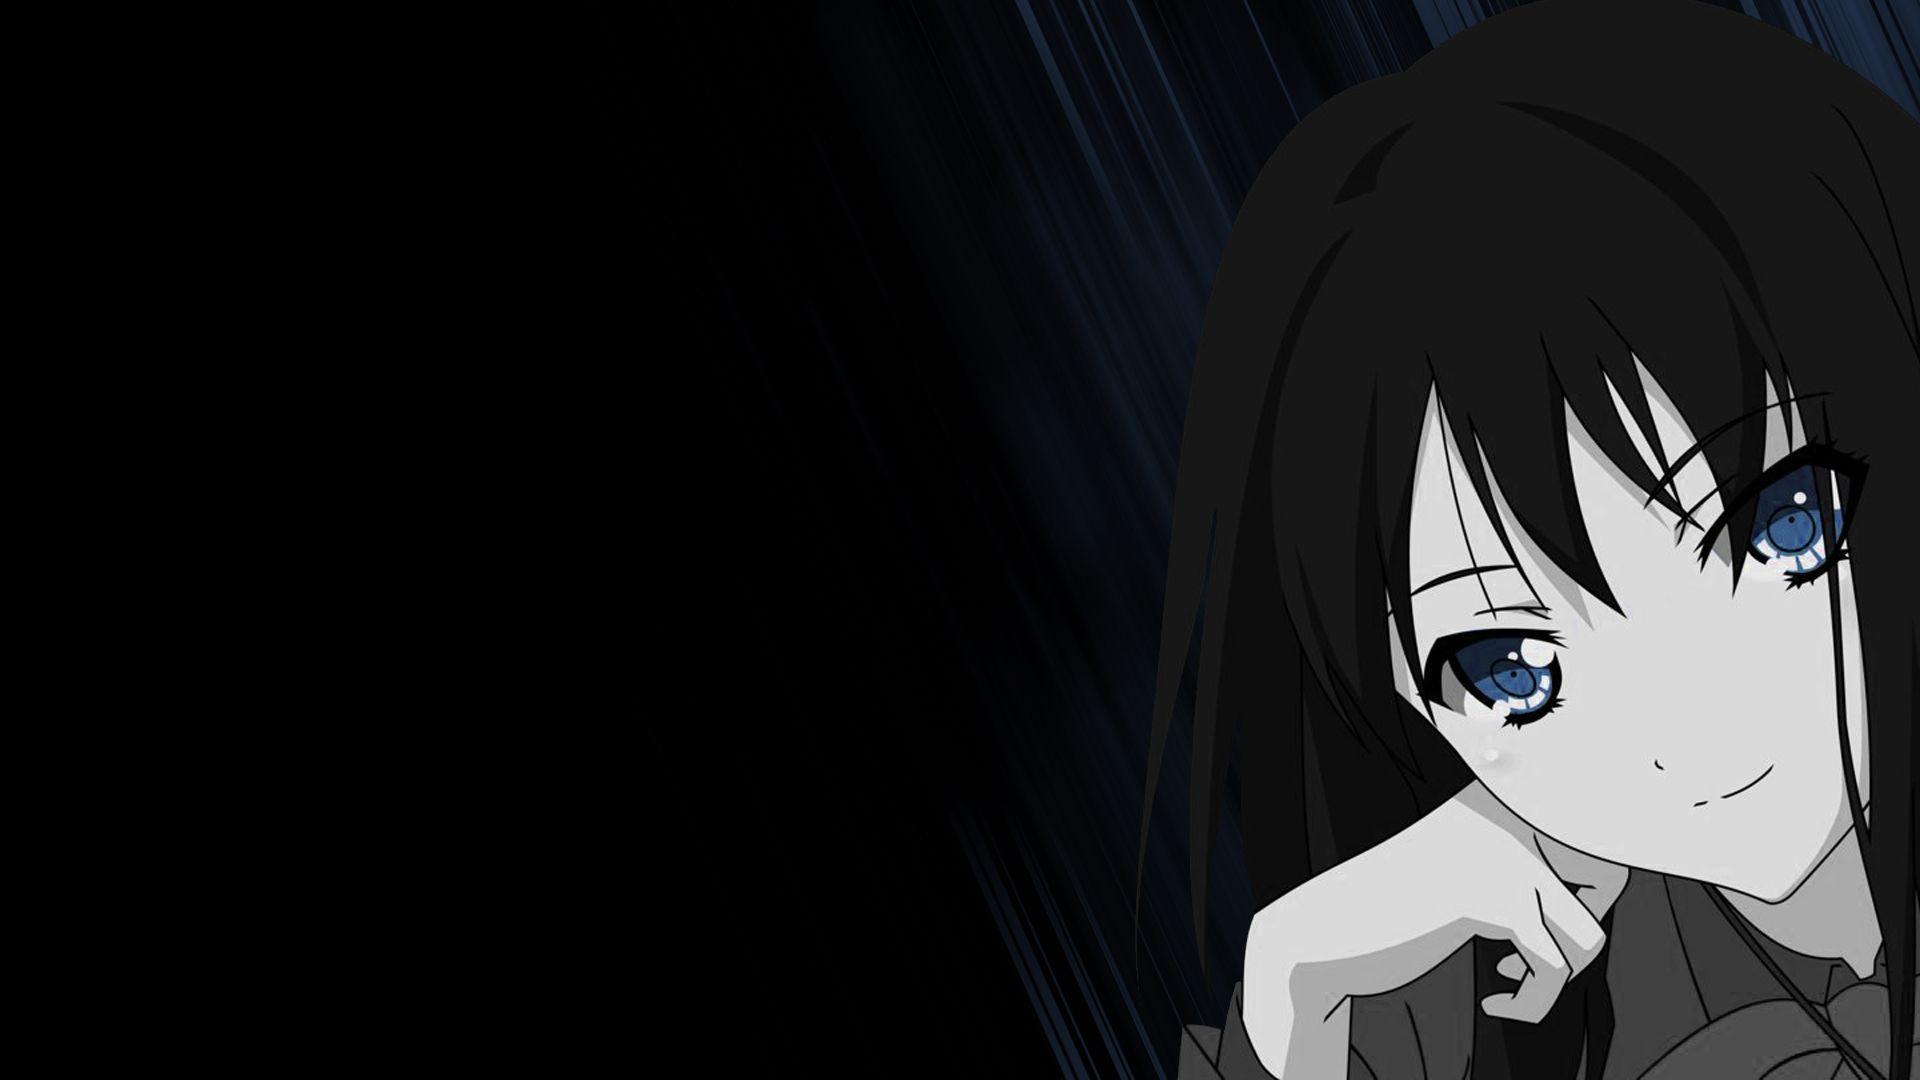 Cute Anime Girl Dark Wallpapers - Top Free Cute Anime Girl Dark